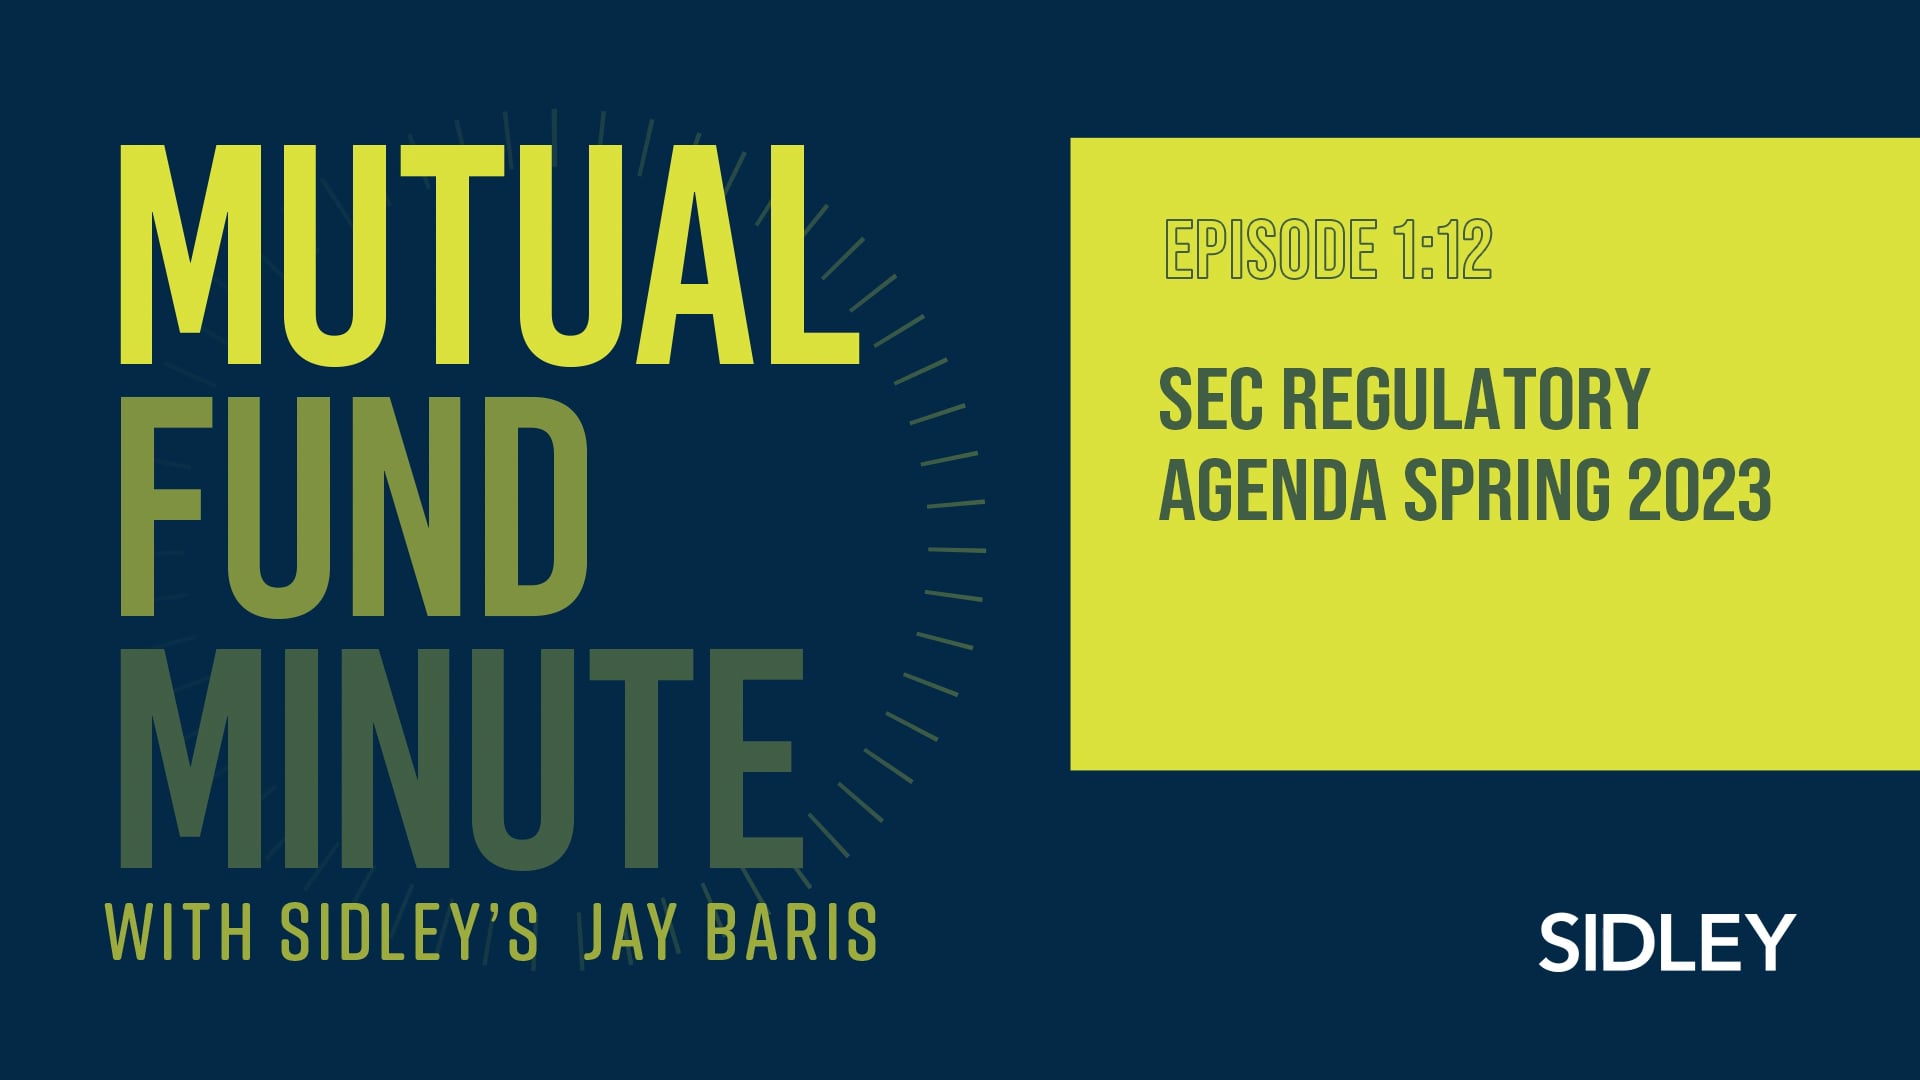 Mutual Fund Minute SEC Regulatory Agenda Spring 2023 on Vimeo